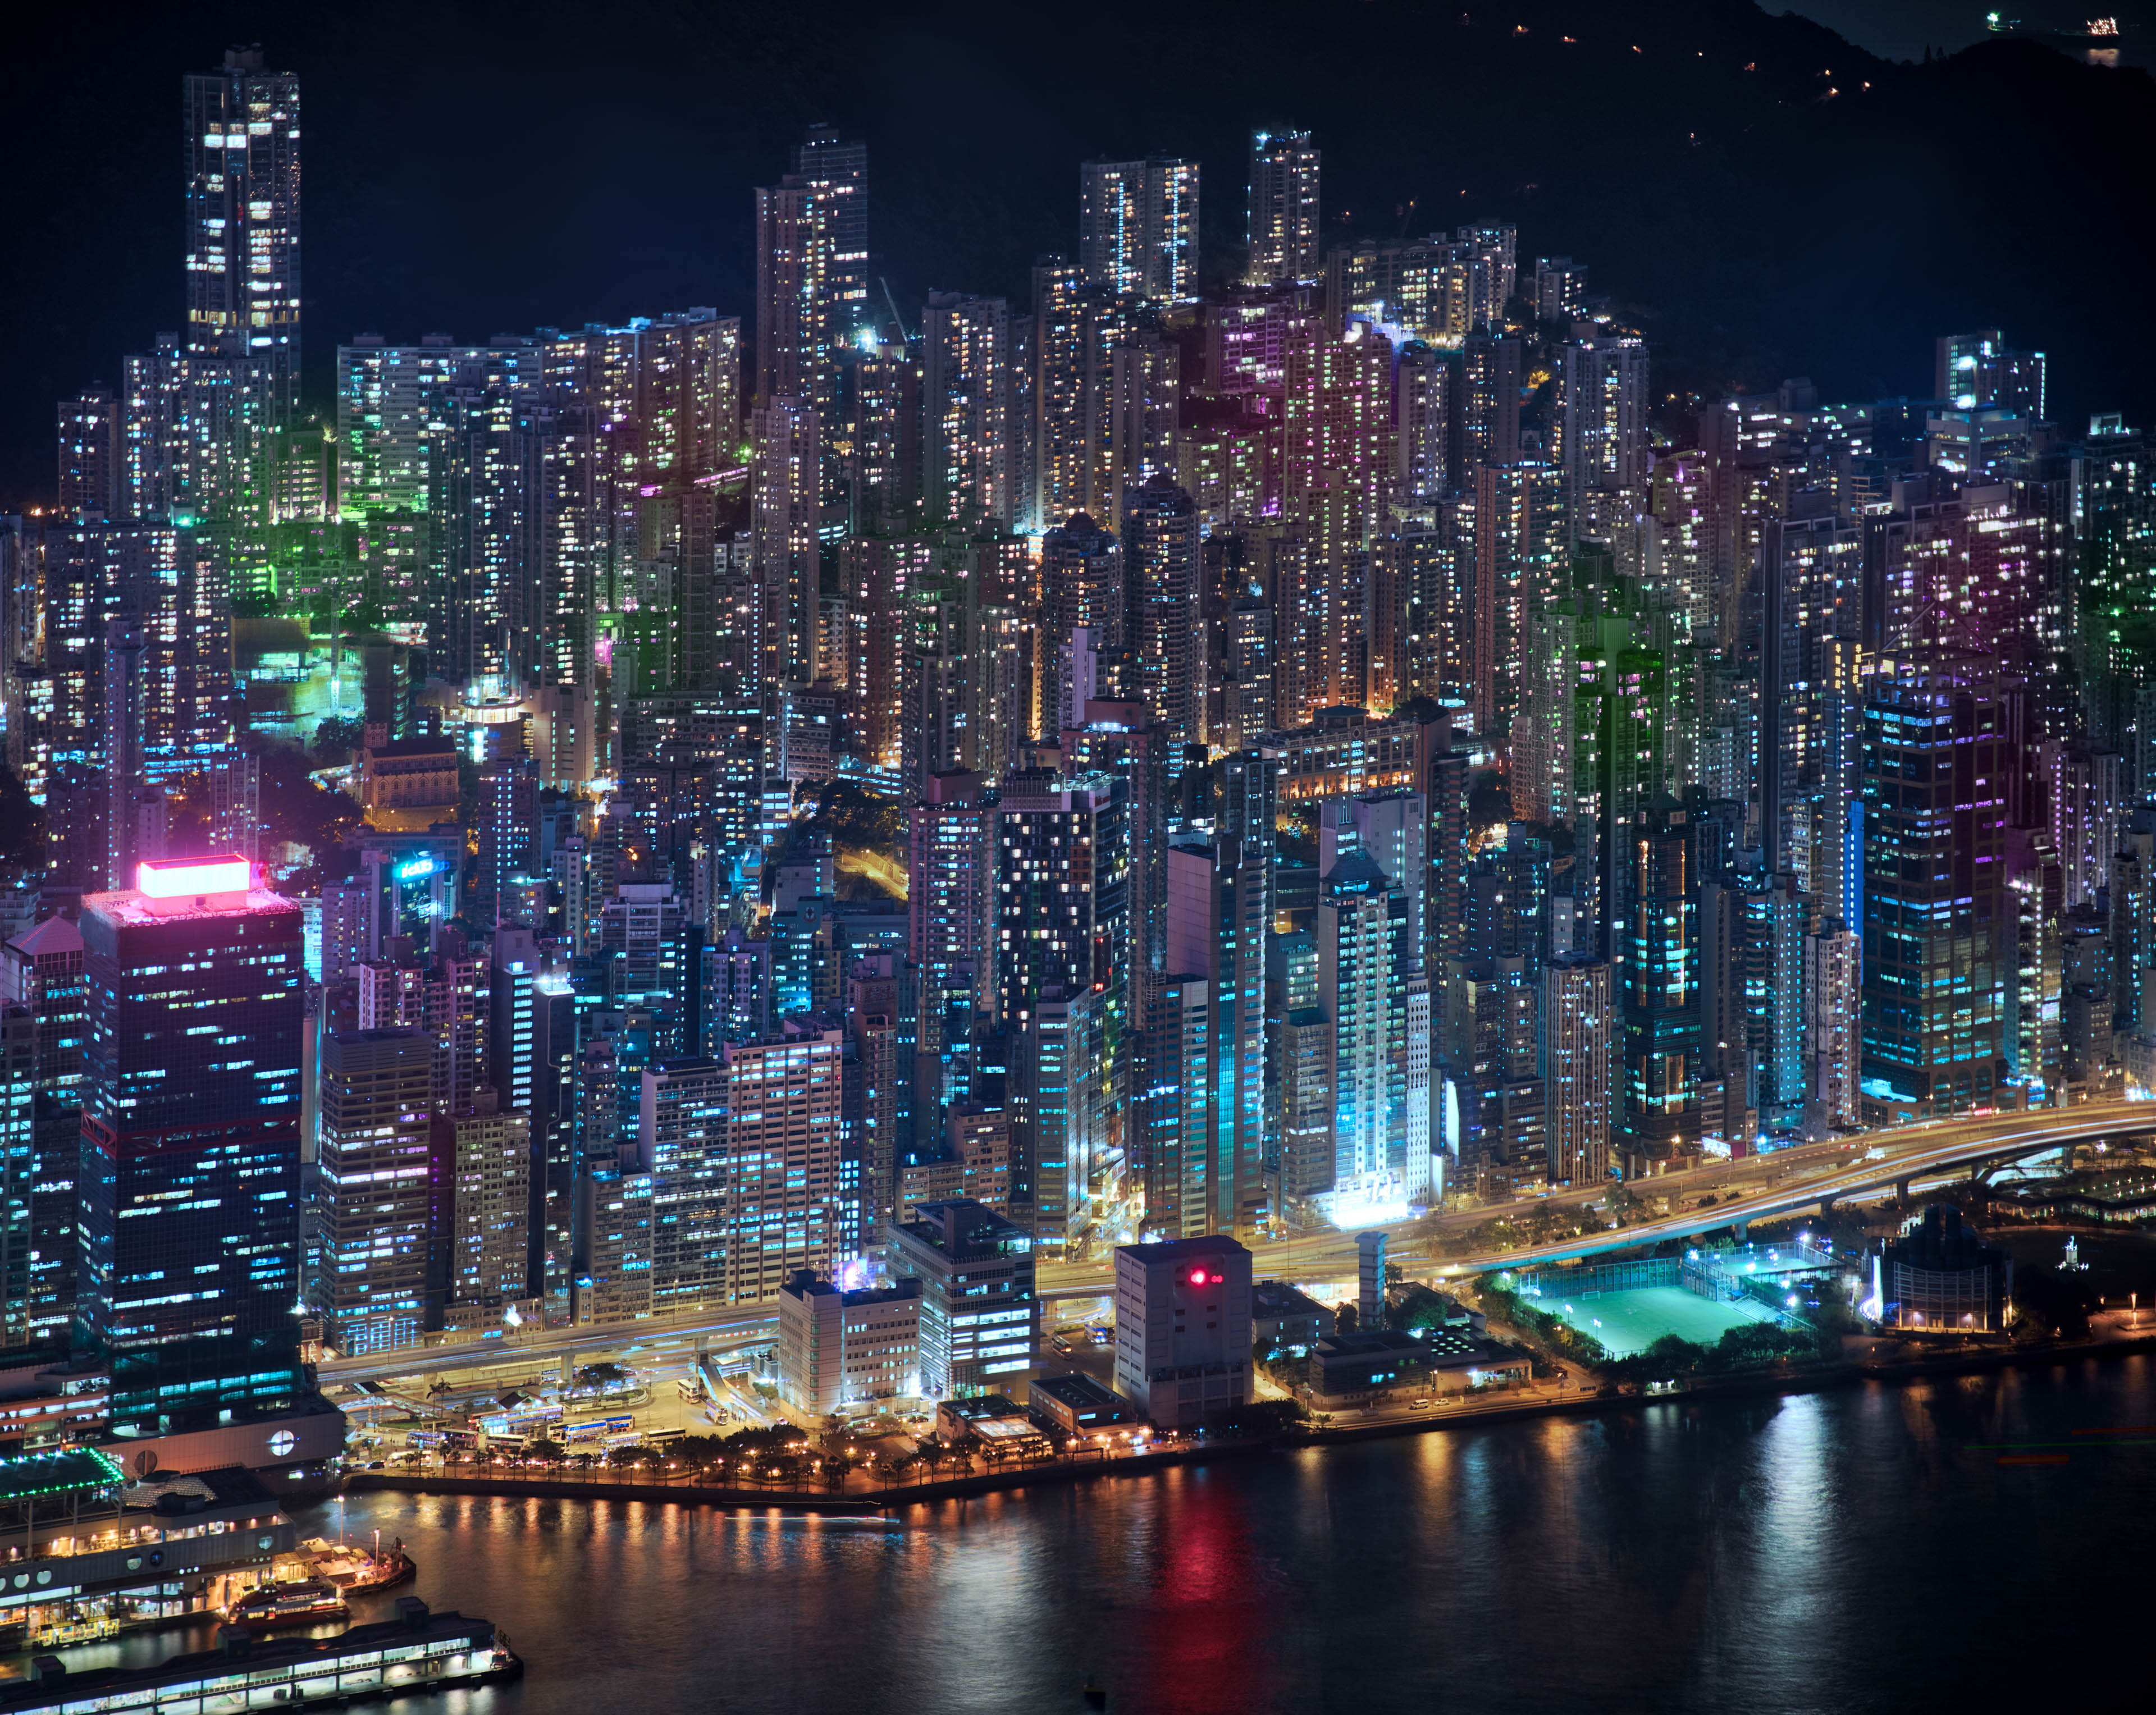 The Megapolis of Hong Kong #0169